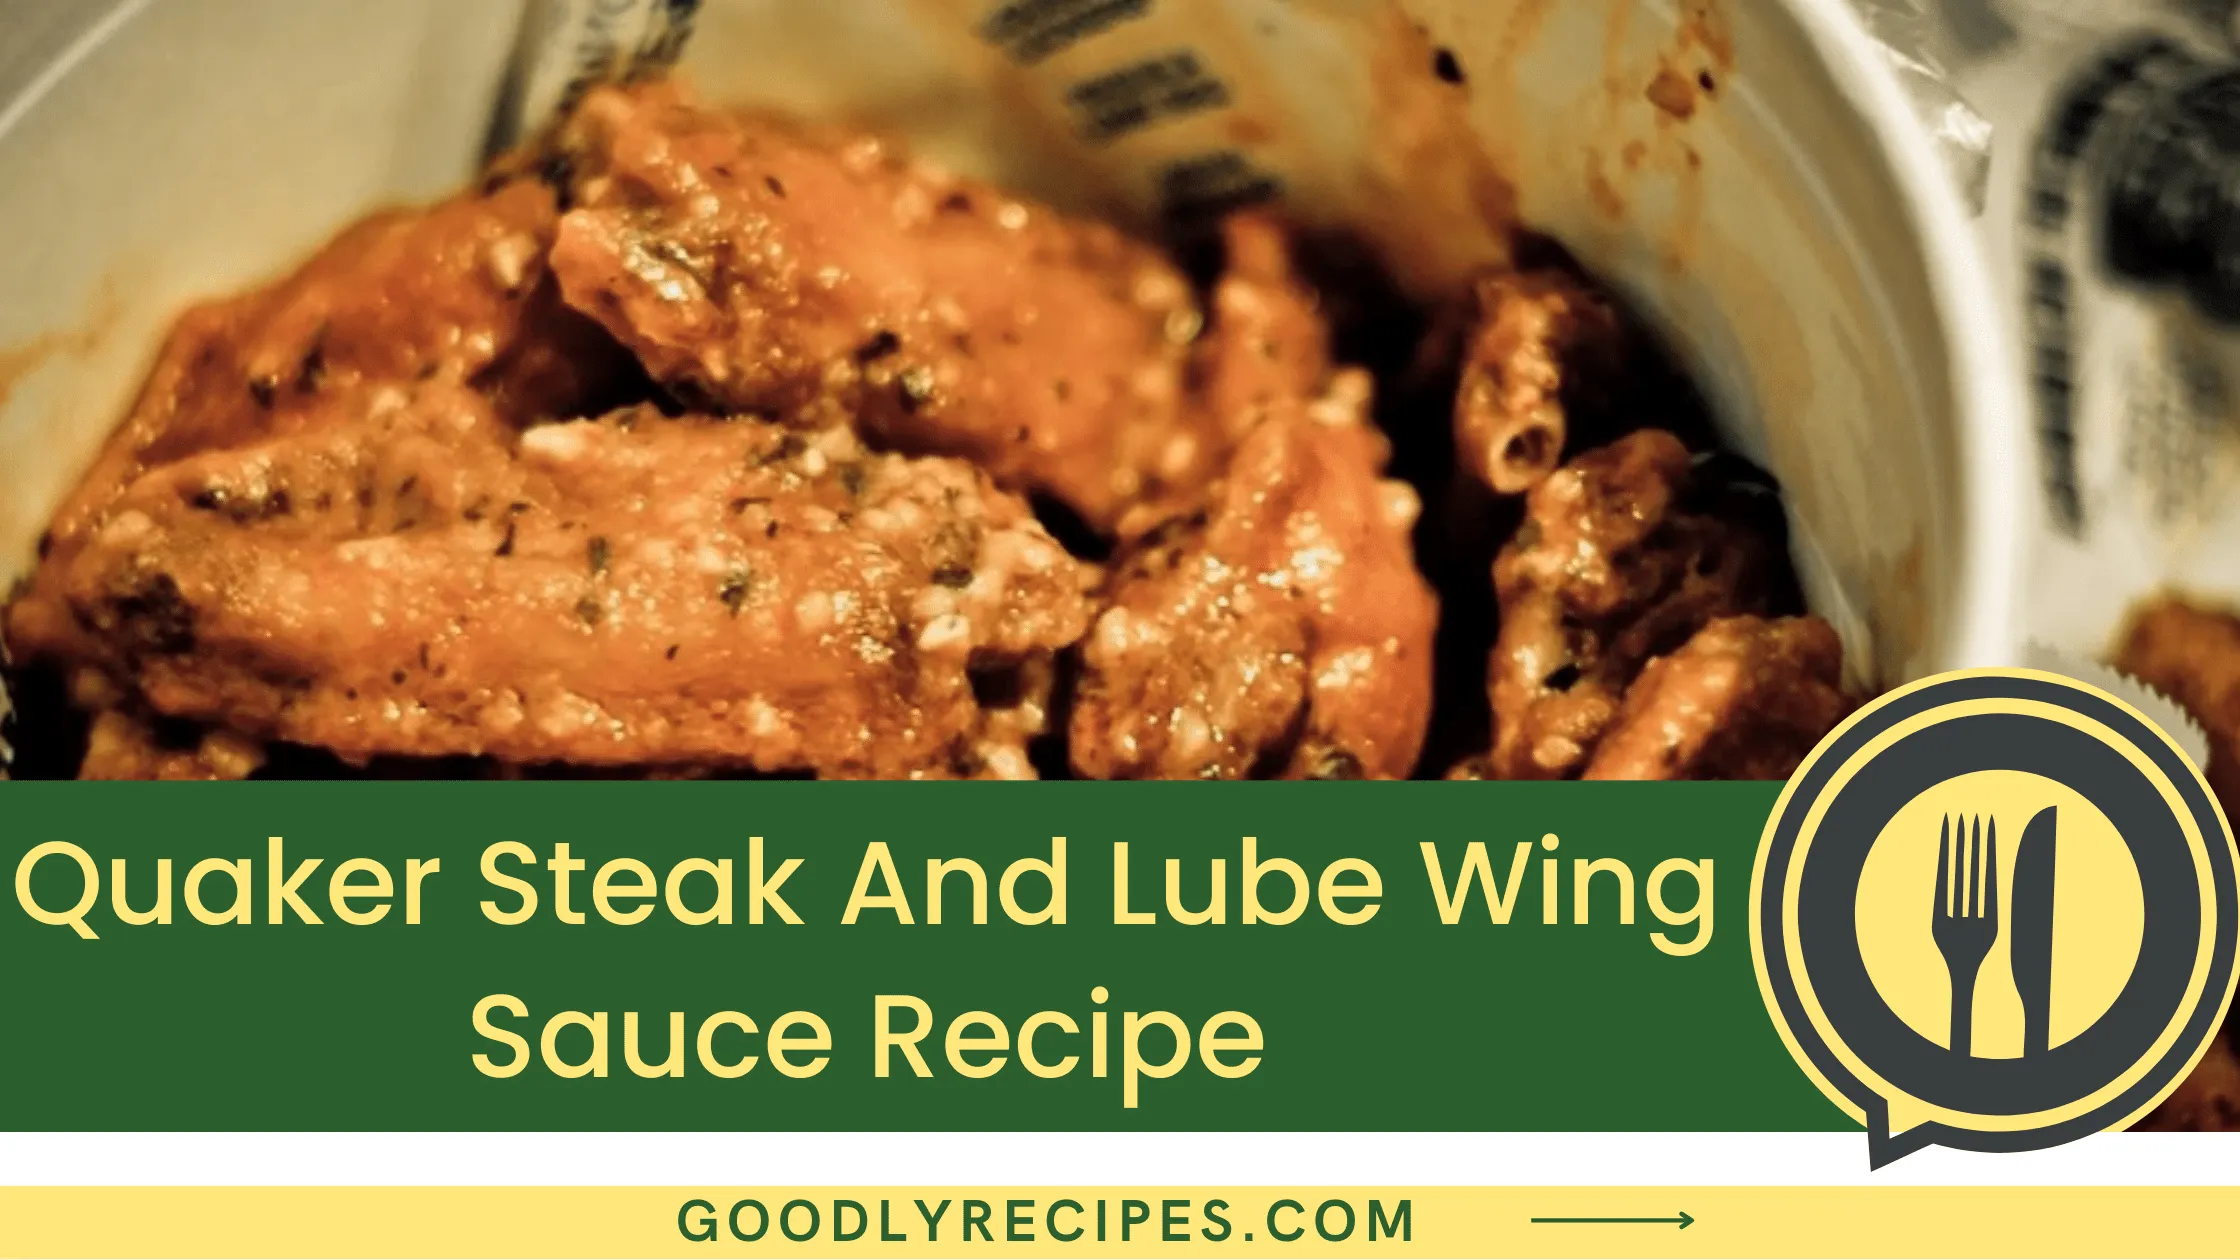 Quaker Steak And Lube Wing Sauce Recipe